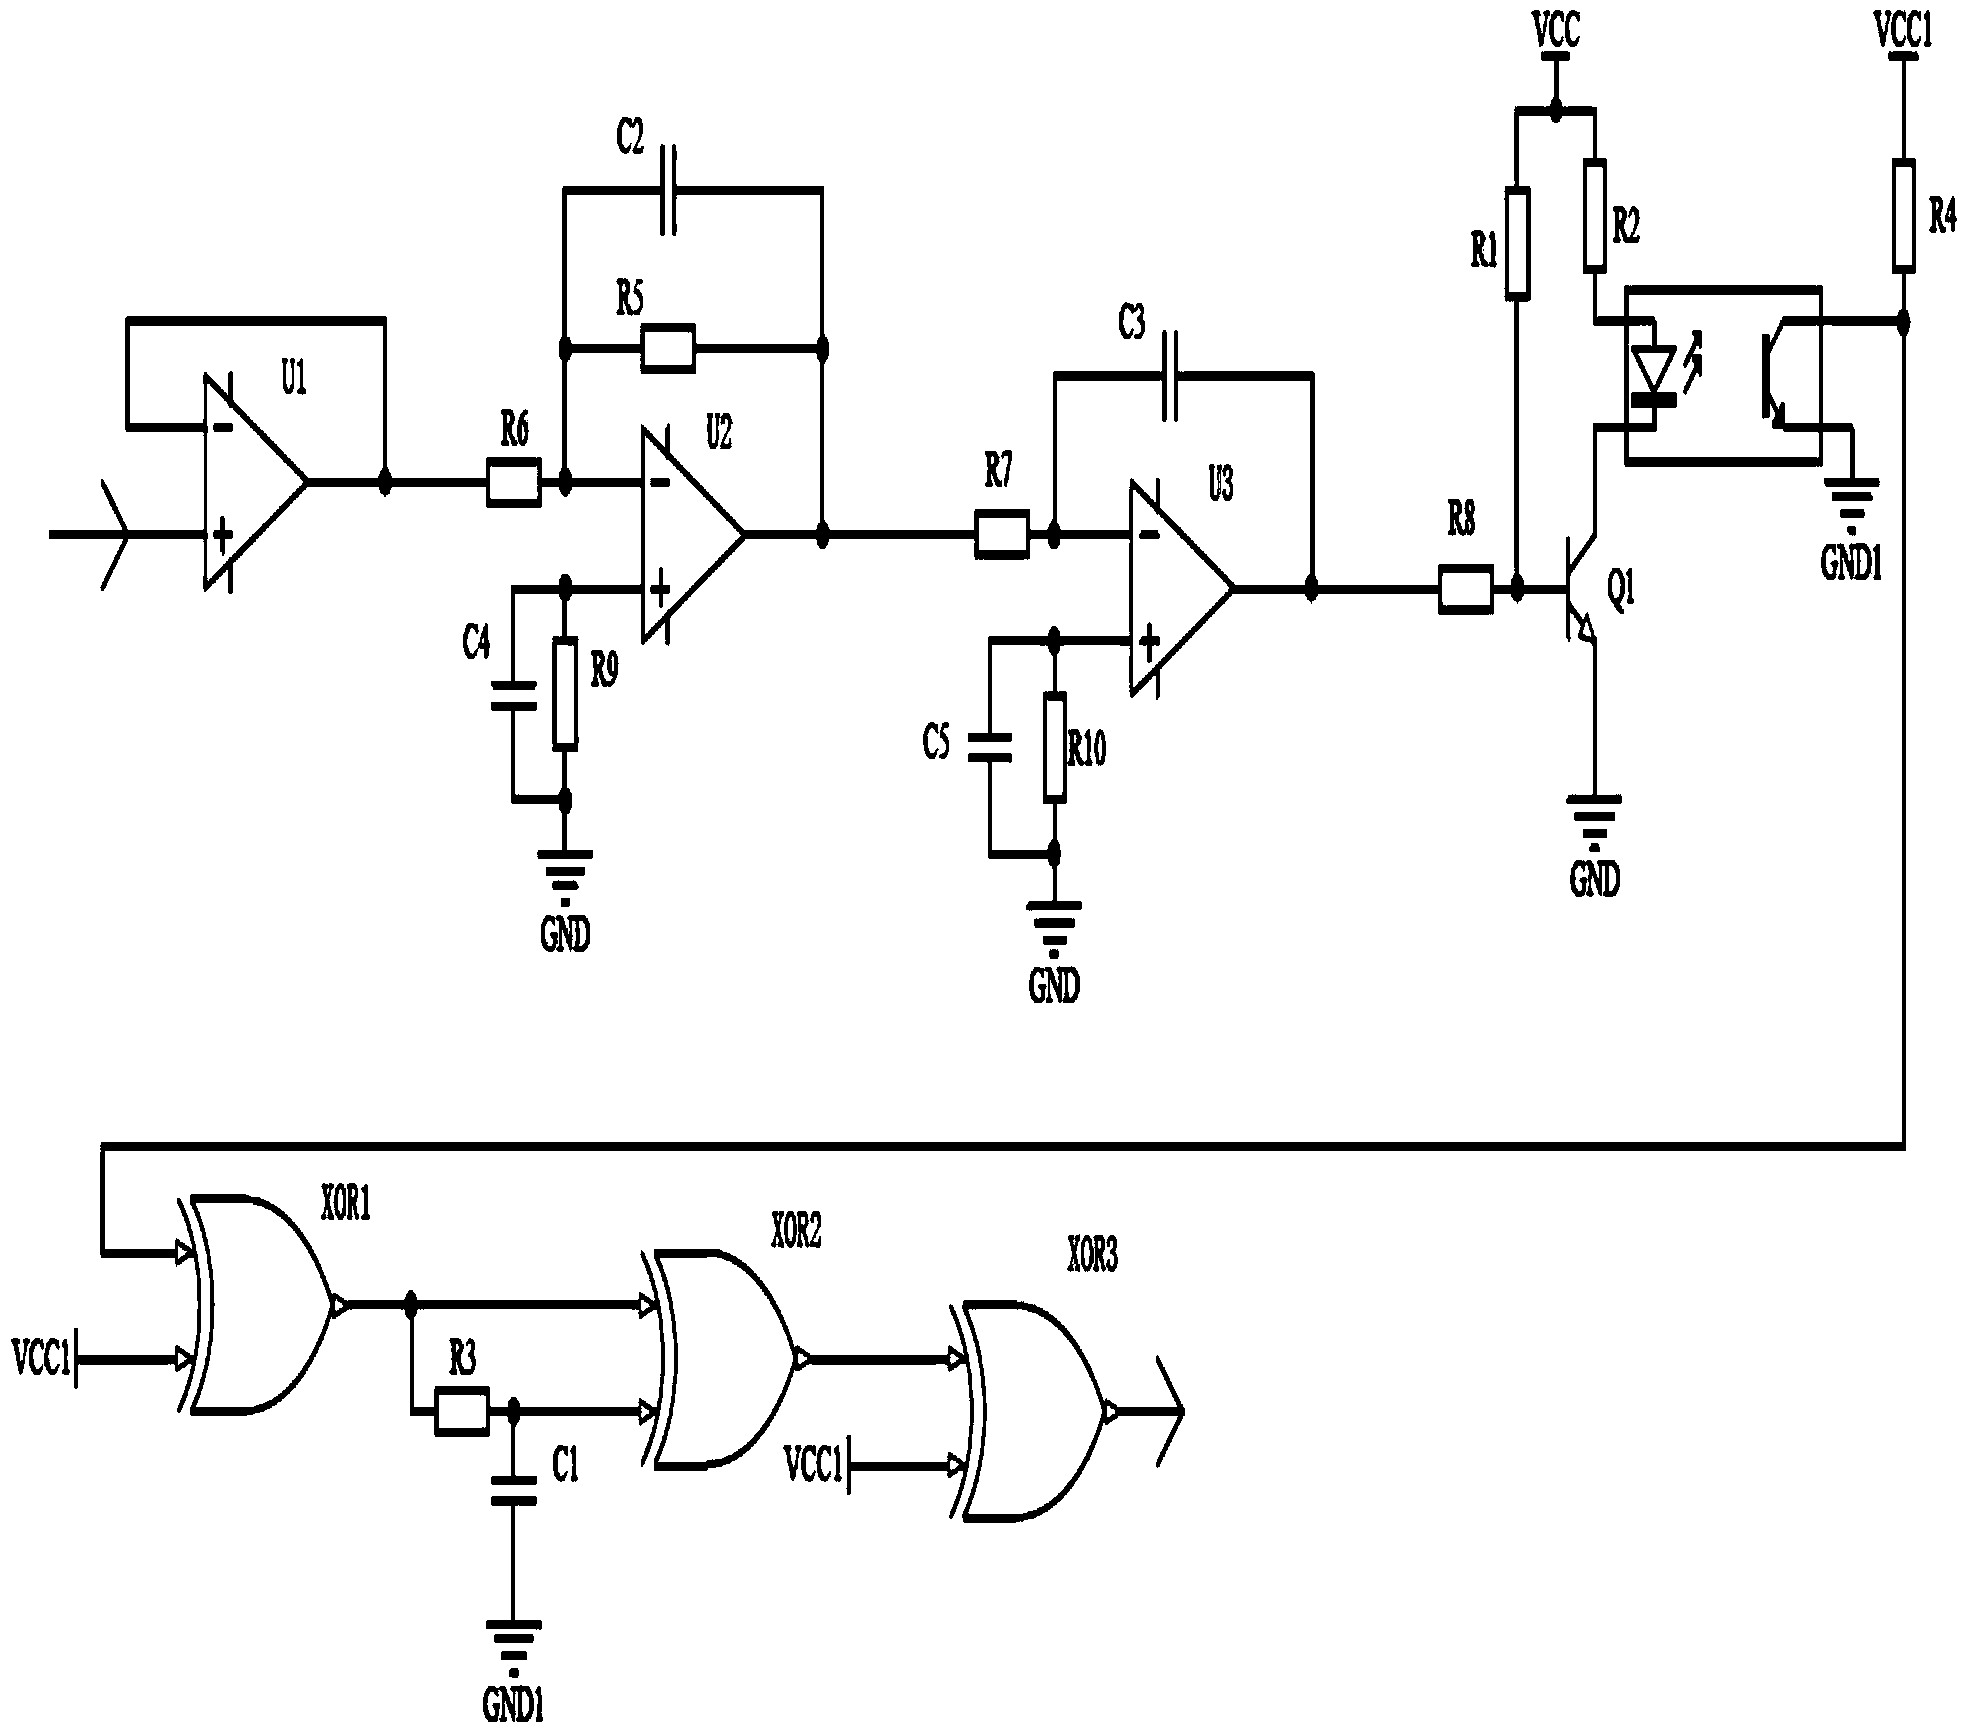 Zero-voltage control circuit for small signals